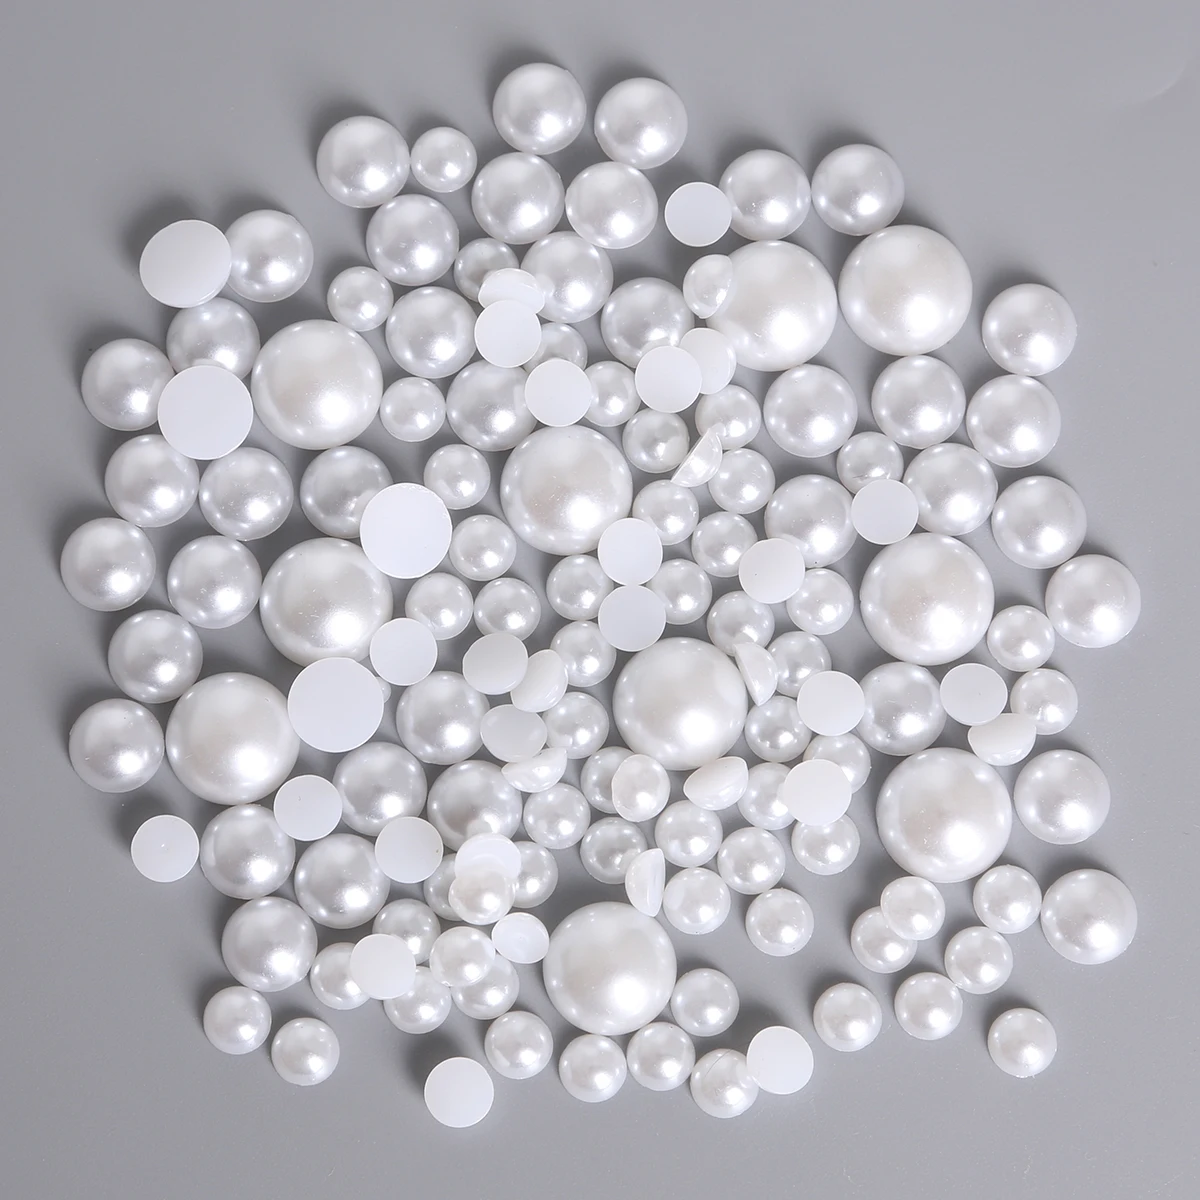 50 Pure White Half Pearl Bead 18mm Flat Back Scrapbook Craft Flatback Beads